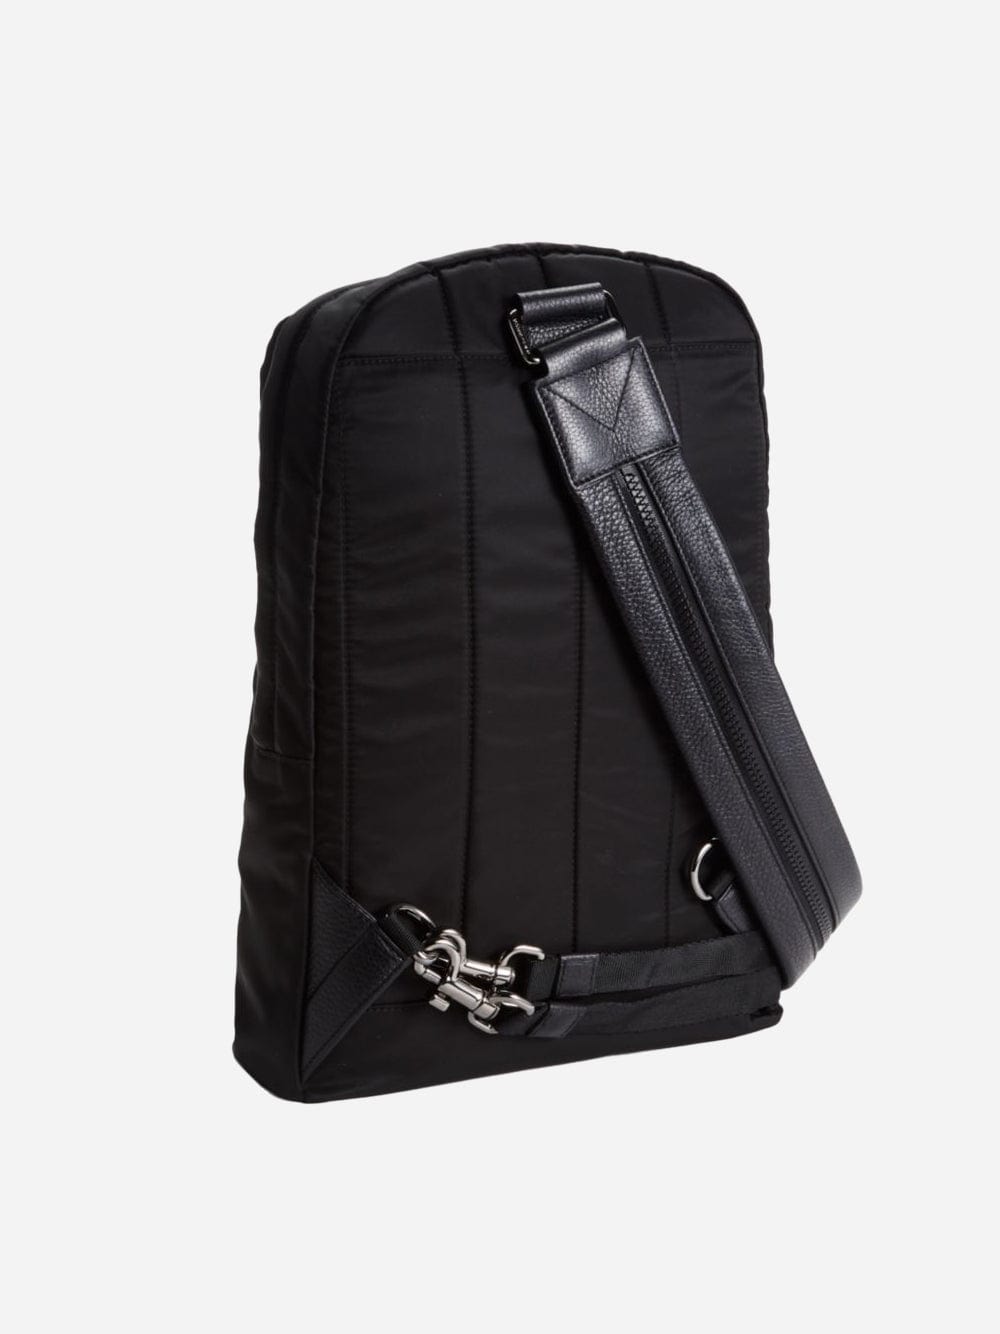 Dolce & Gabbana Convertible Logo Graphic Backpack